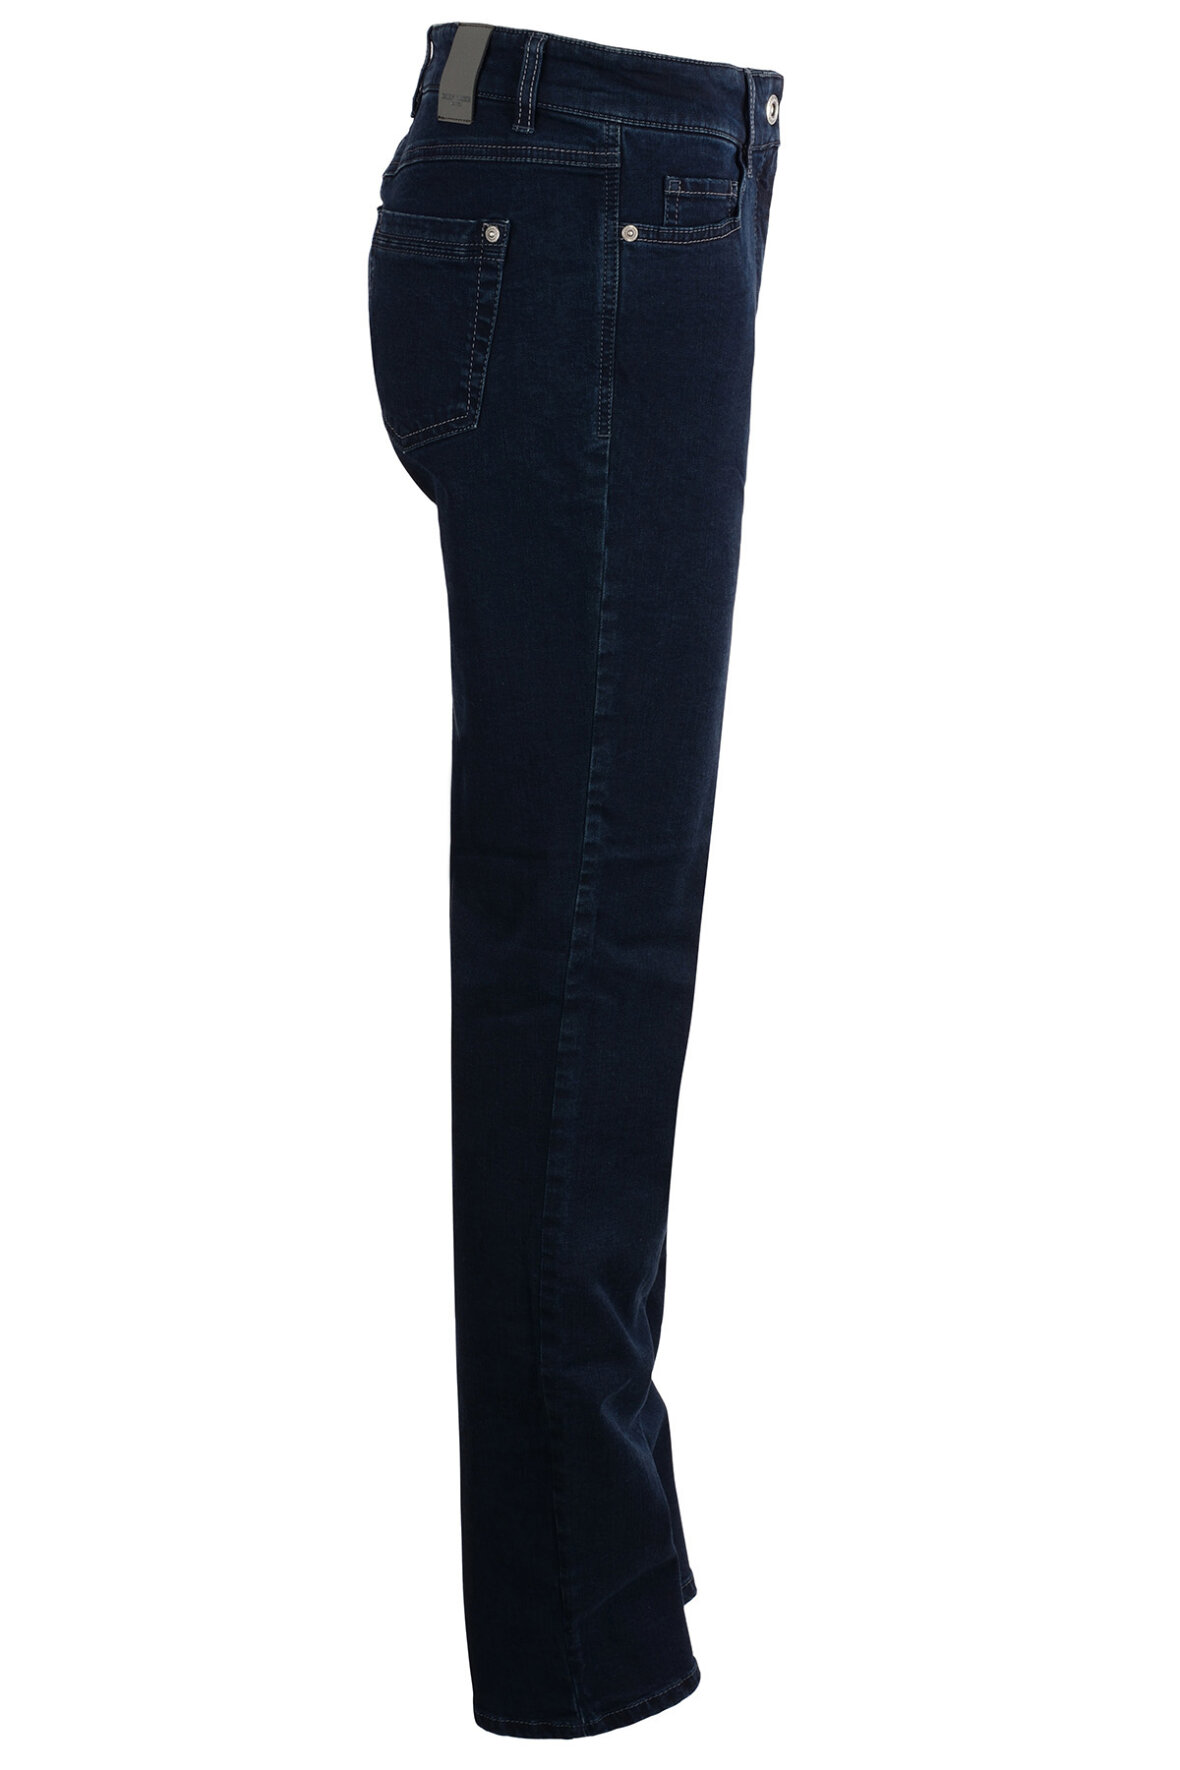 farvestof hybrid Mening Gerry Weber Romy Straight Fit kvalitets jeans til piger - Hos Lohse